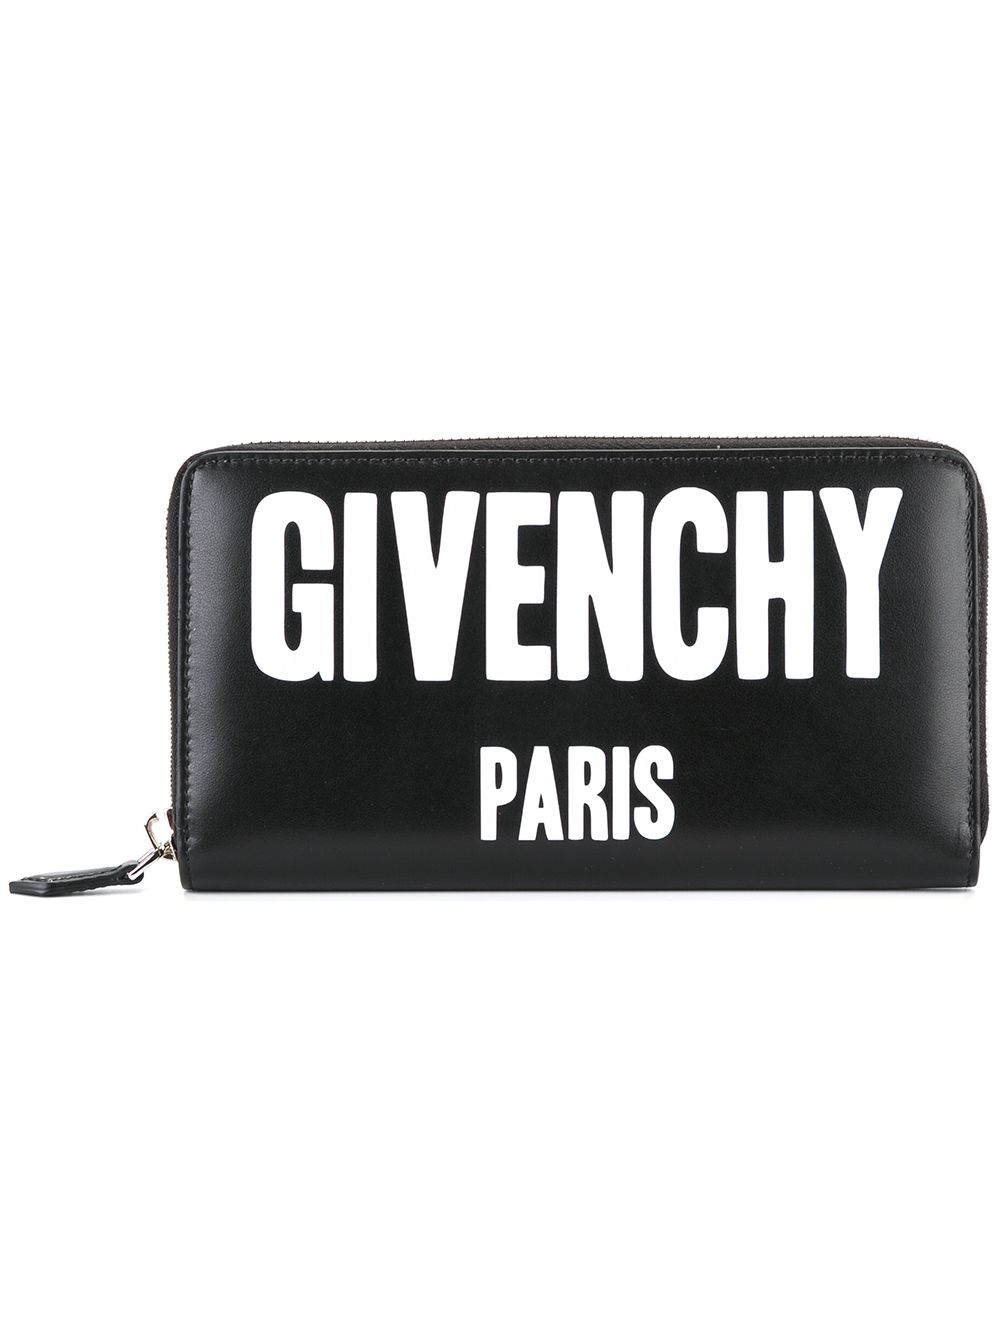 фото Givenchy кошелек iconic на молнии